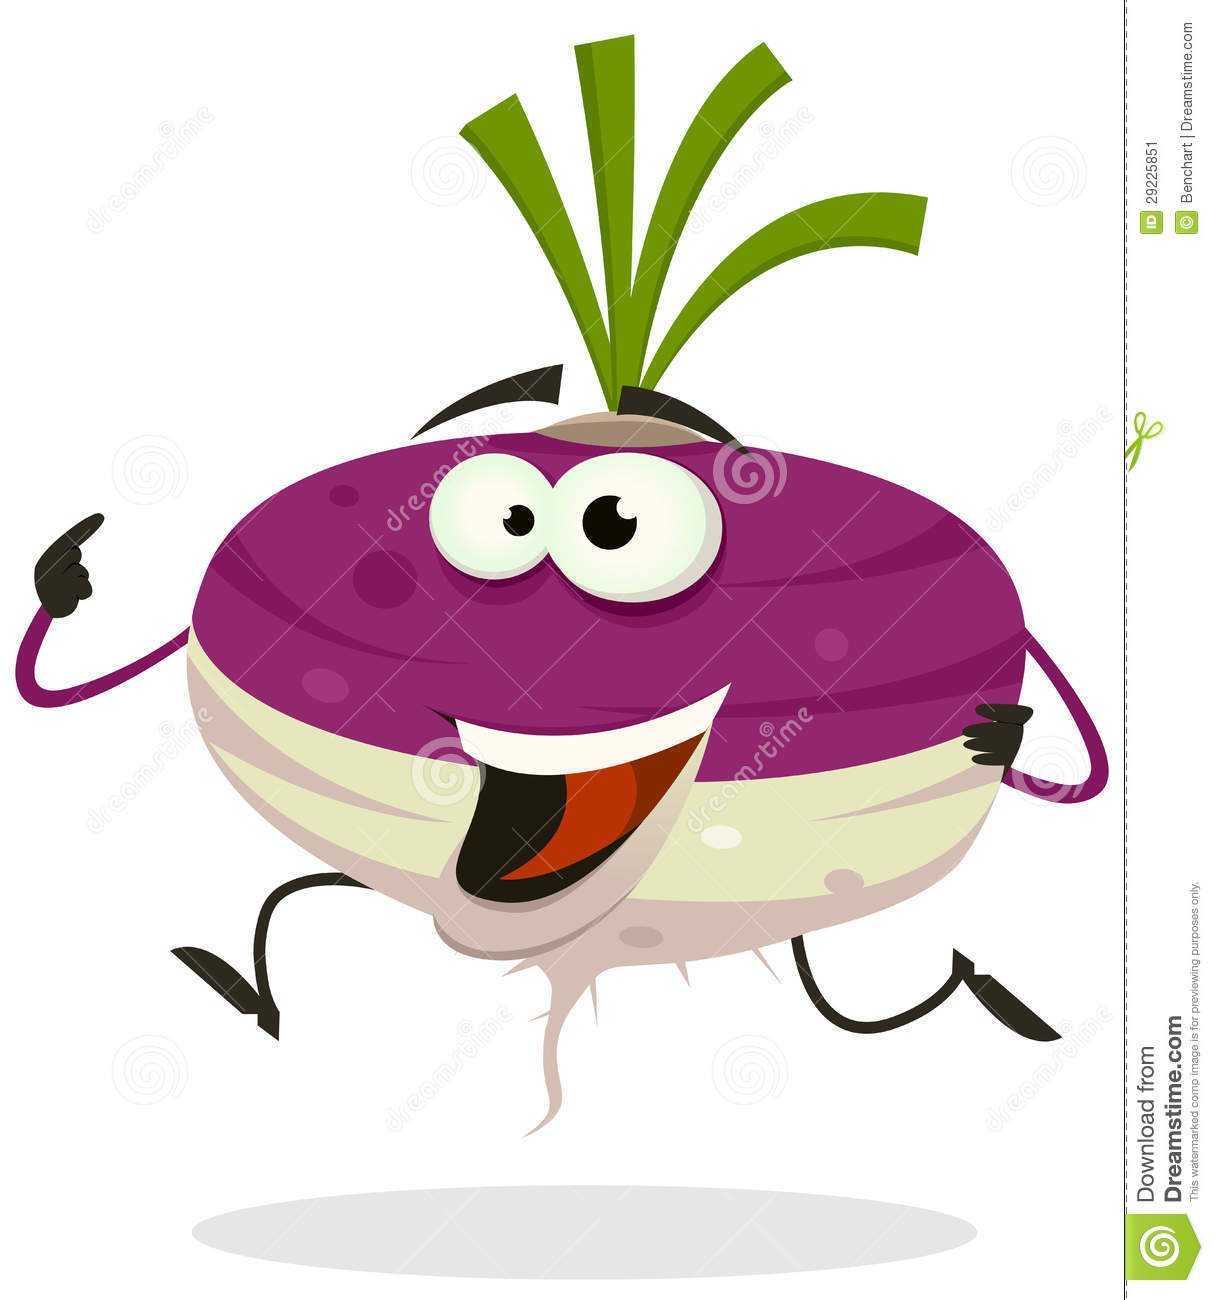     Of A Funny Happy Cartoon Turnip Or Radish Vegetable Character Running